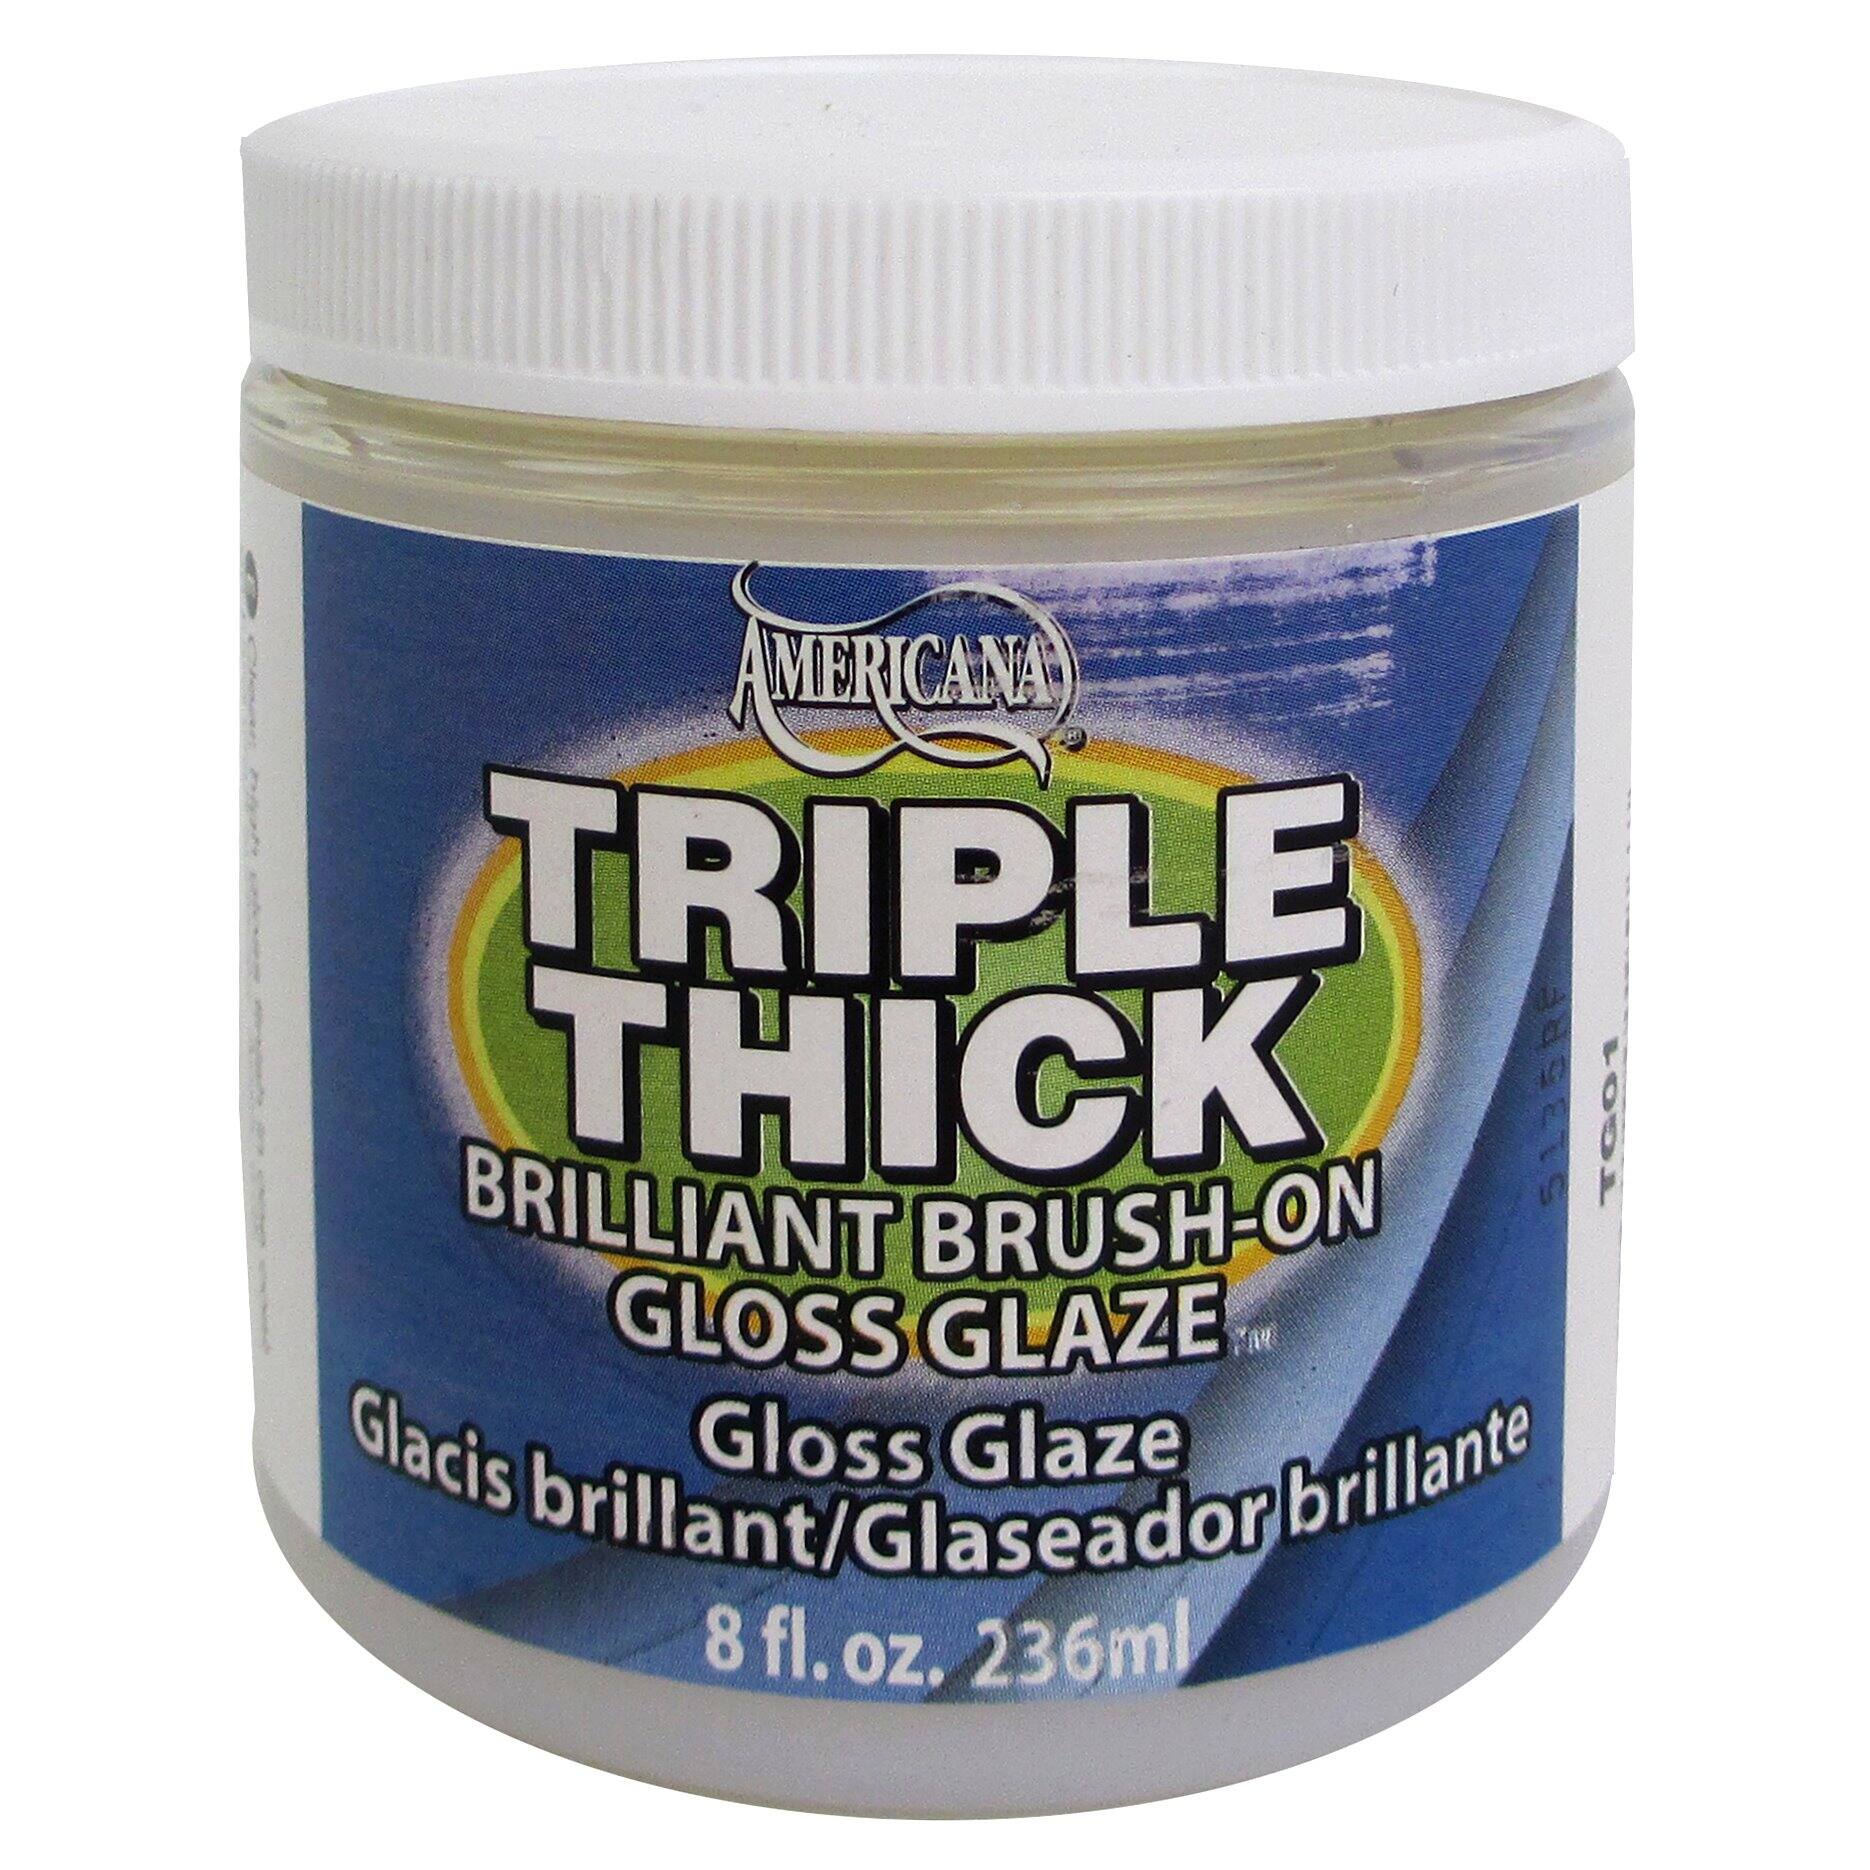 DecoArt Triple Thick Brilliant Brush-On Gloss Glaze 8oz Tub, 1